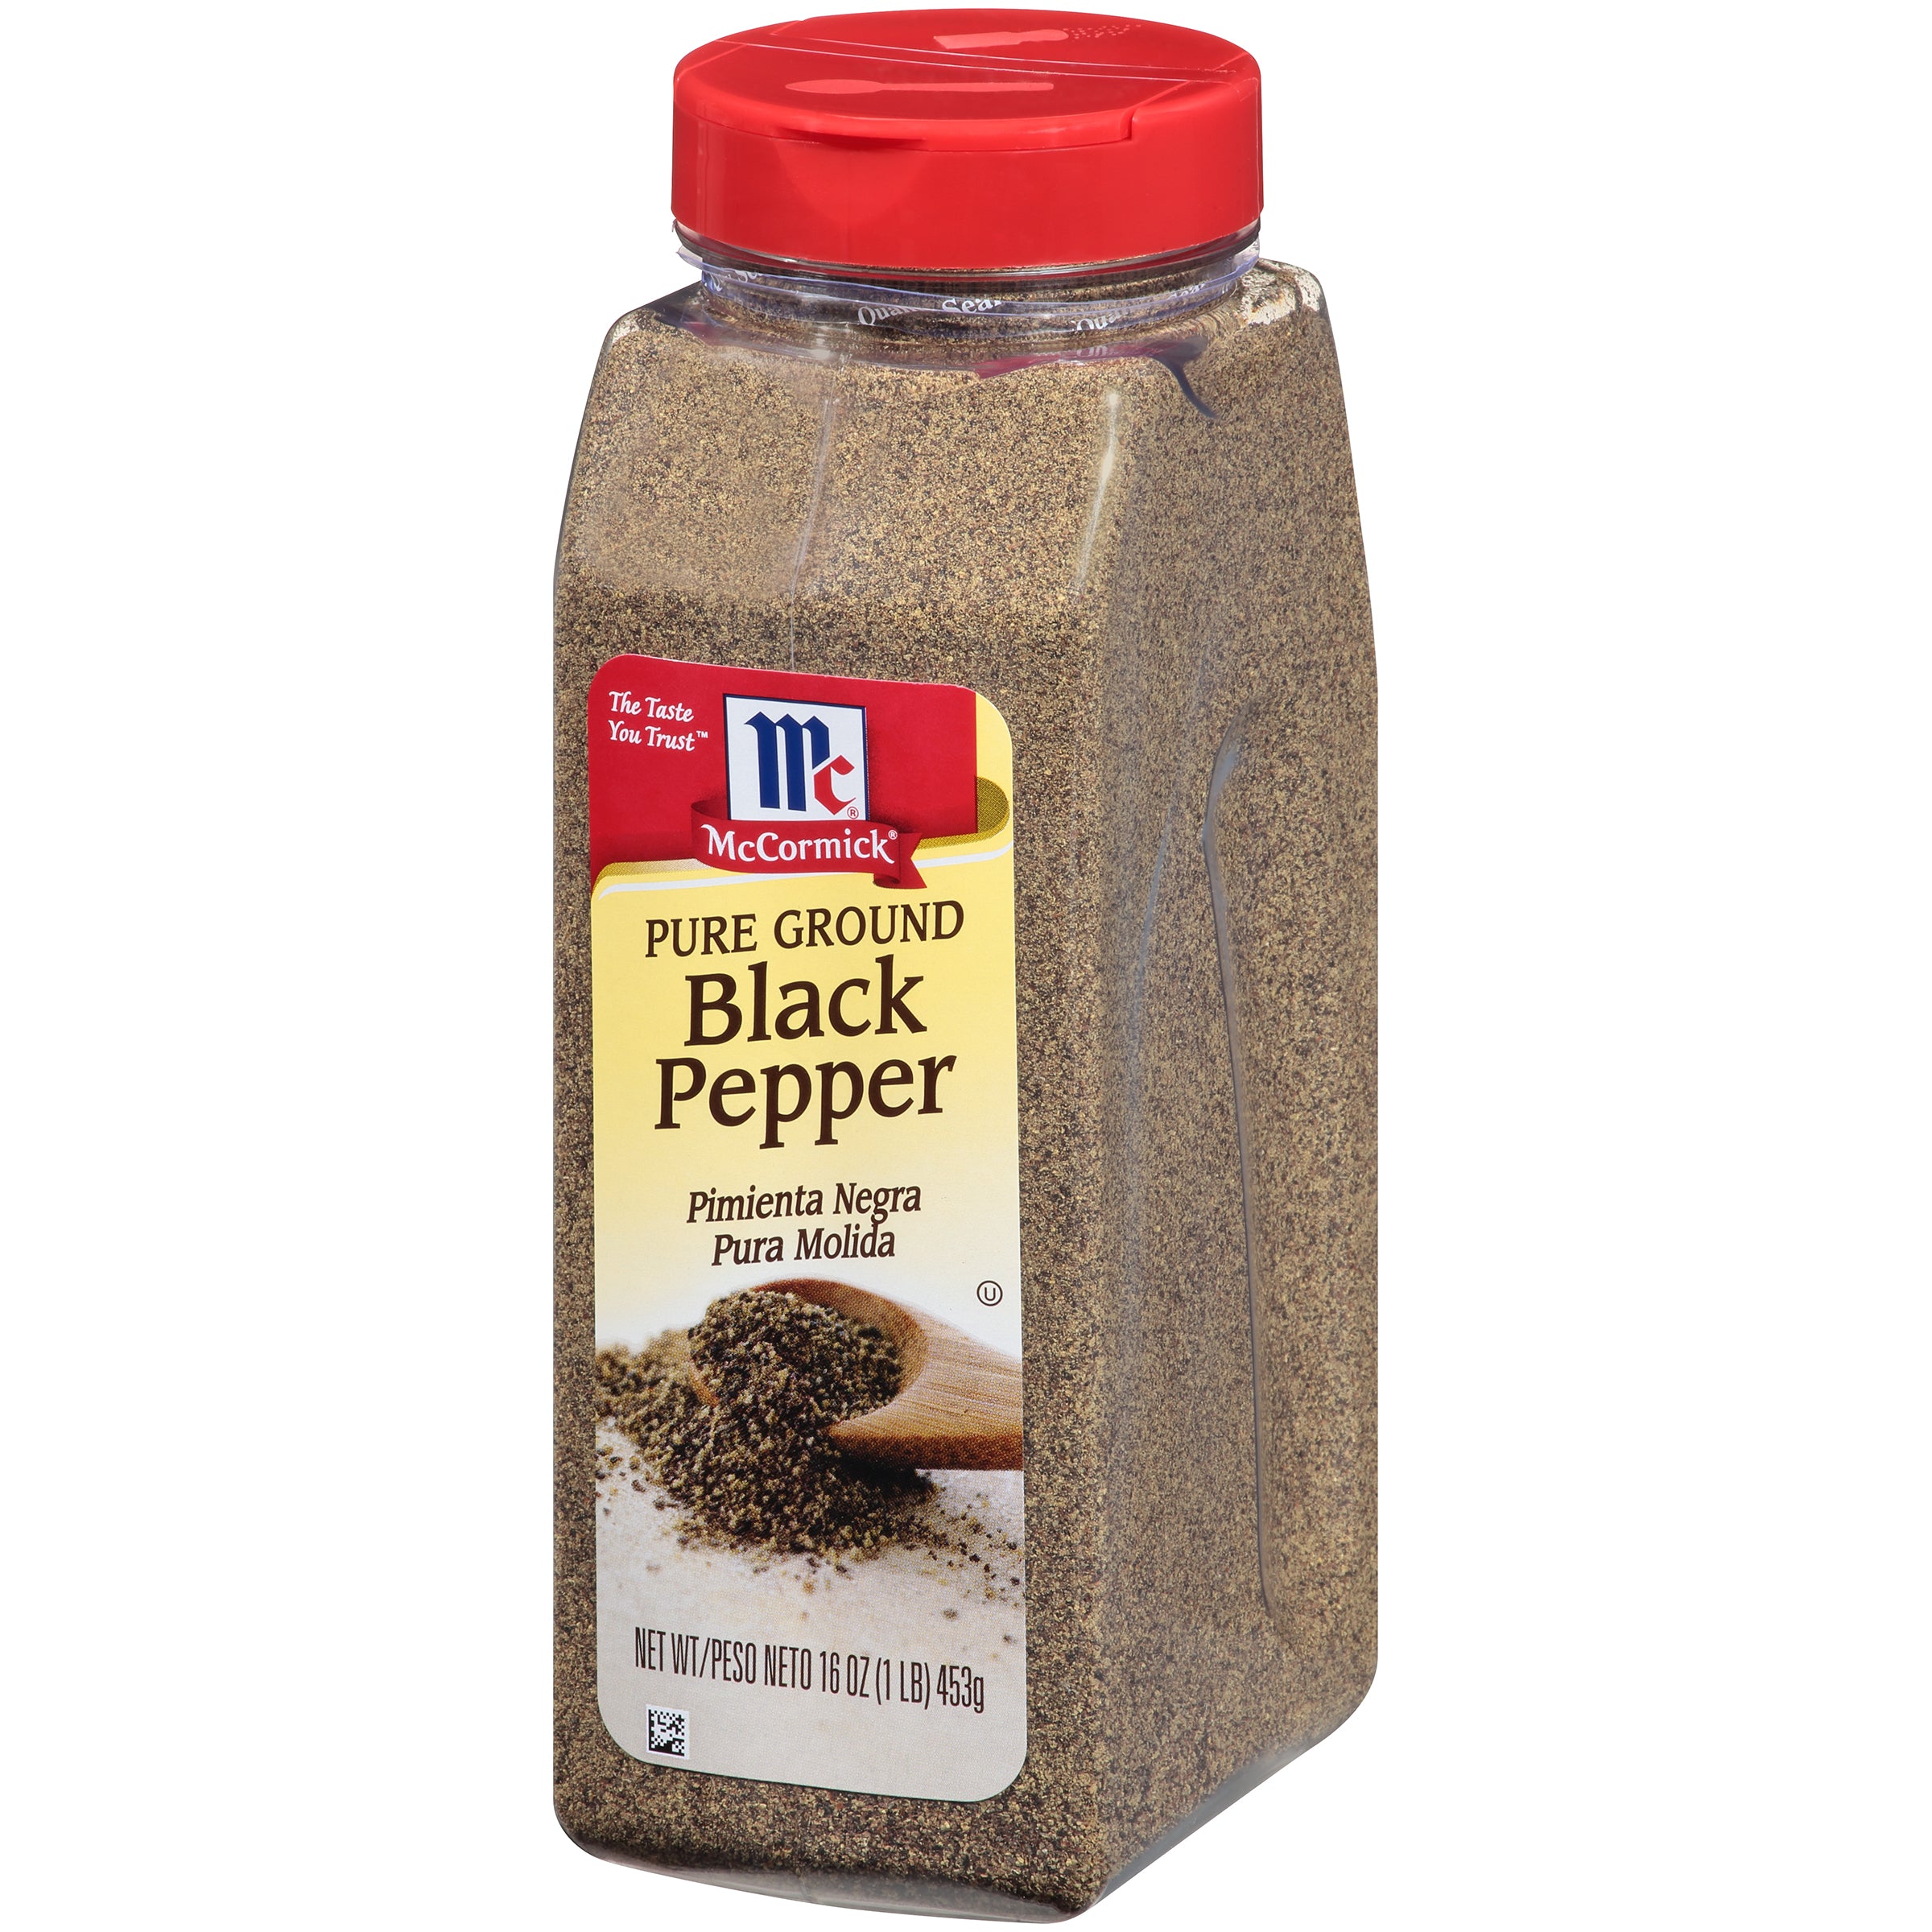 Mccormick Peppercorns, Organic, Black, Whole - 13.75 oz